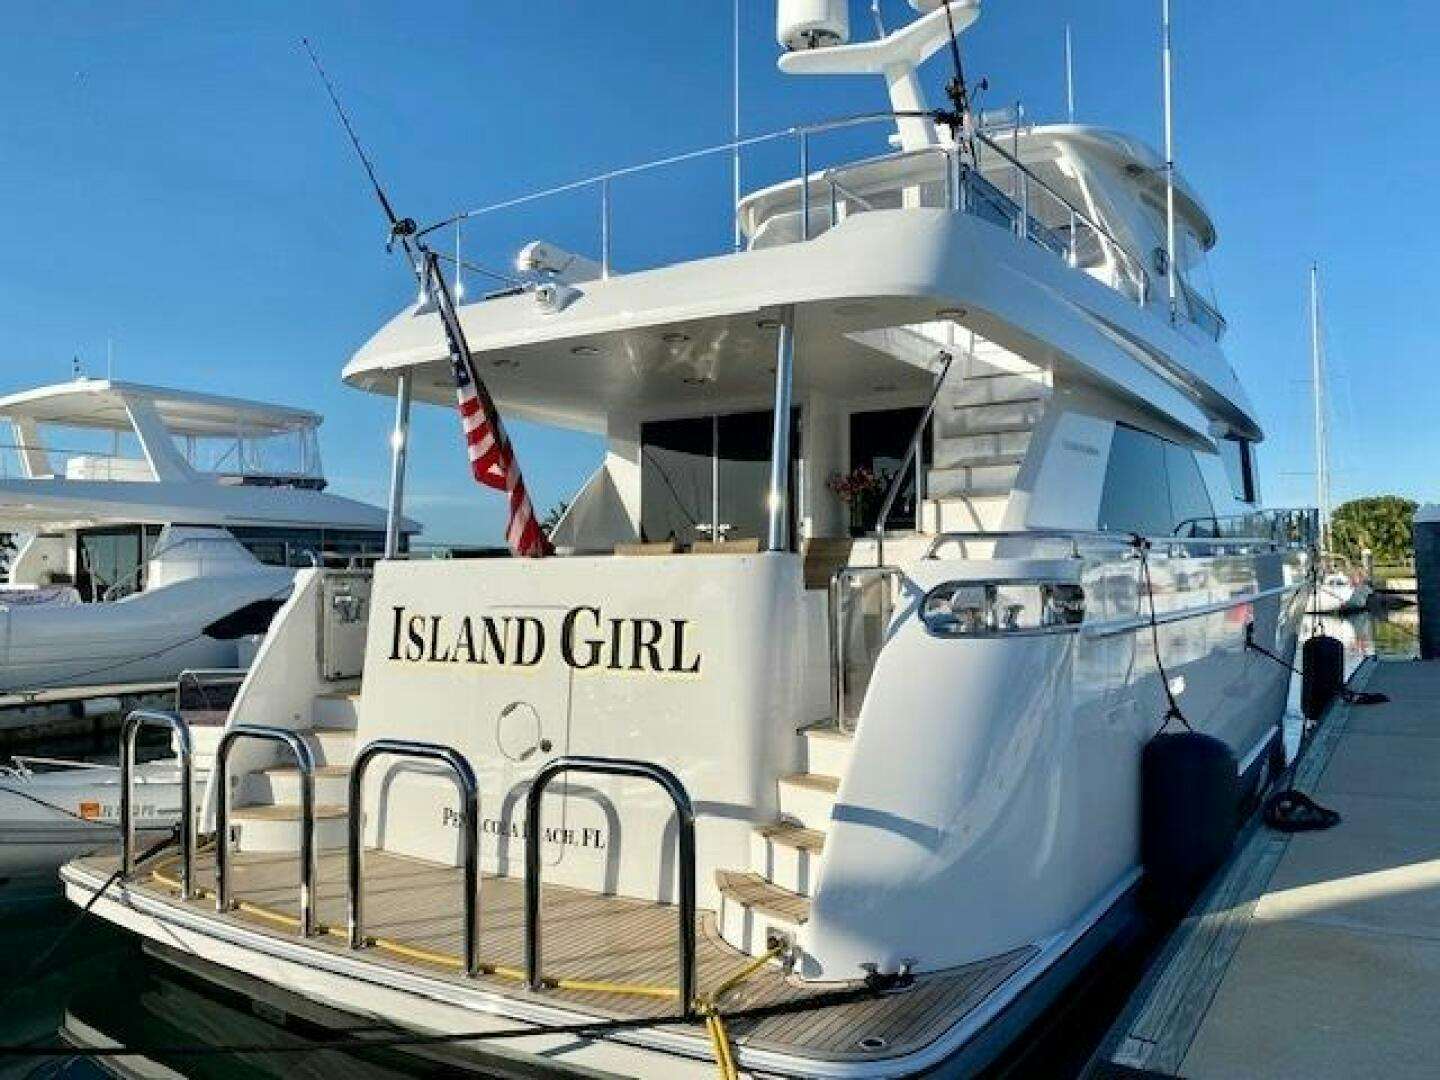 Island girl
Yacht for Sale